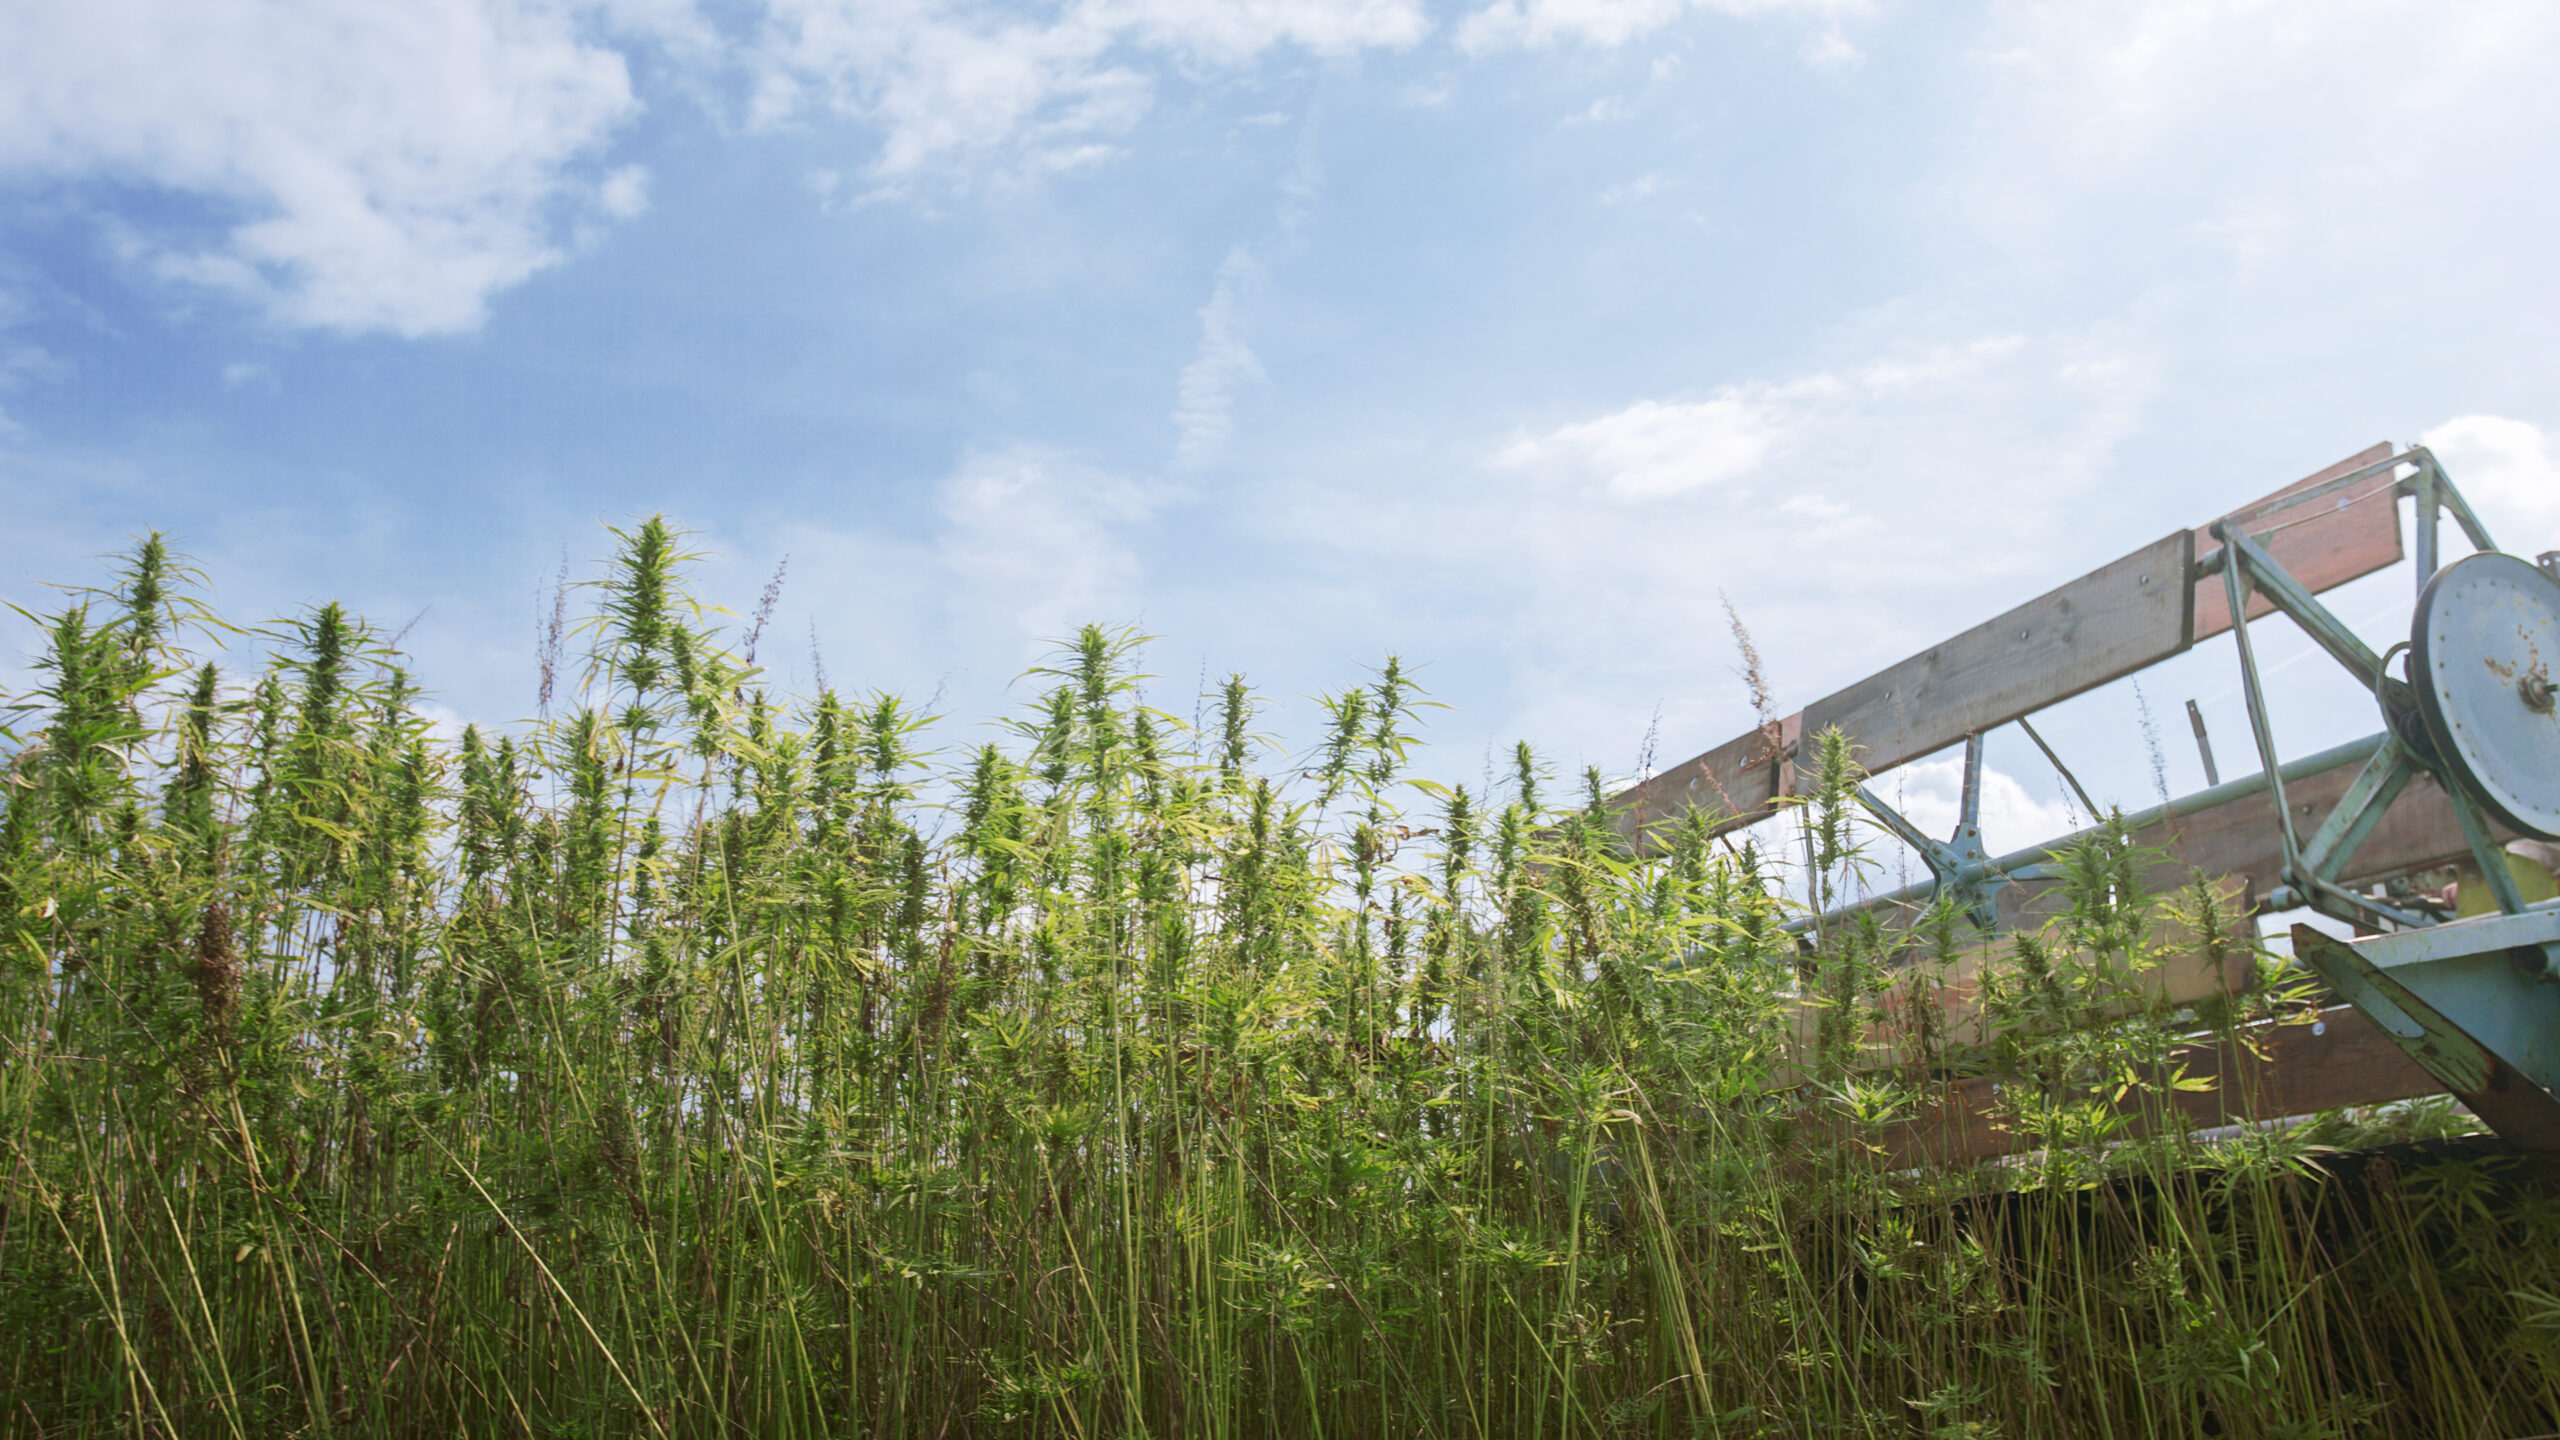 Cbd hemp combine harvester working on field growing cannabis plants.